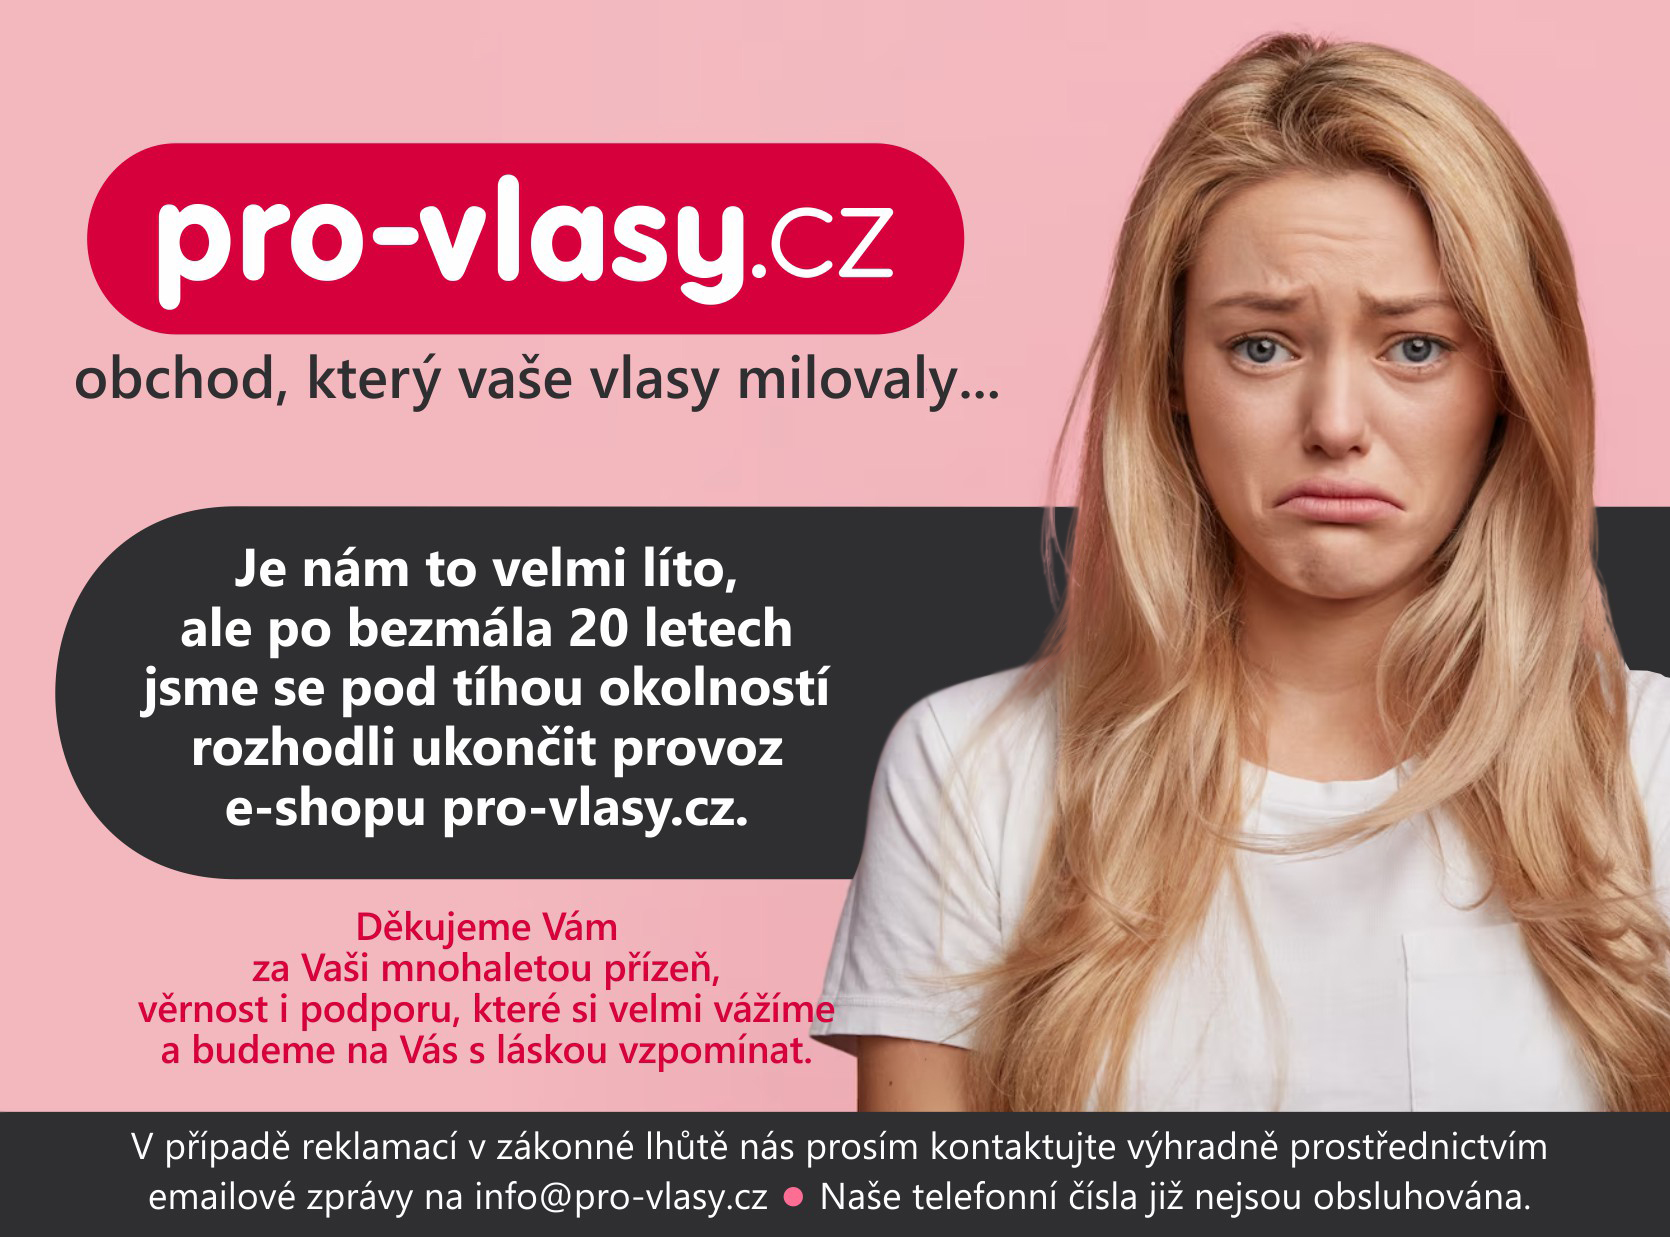 Pro-vlasy.cz